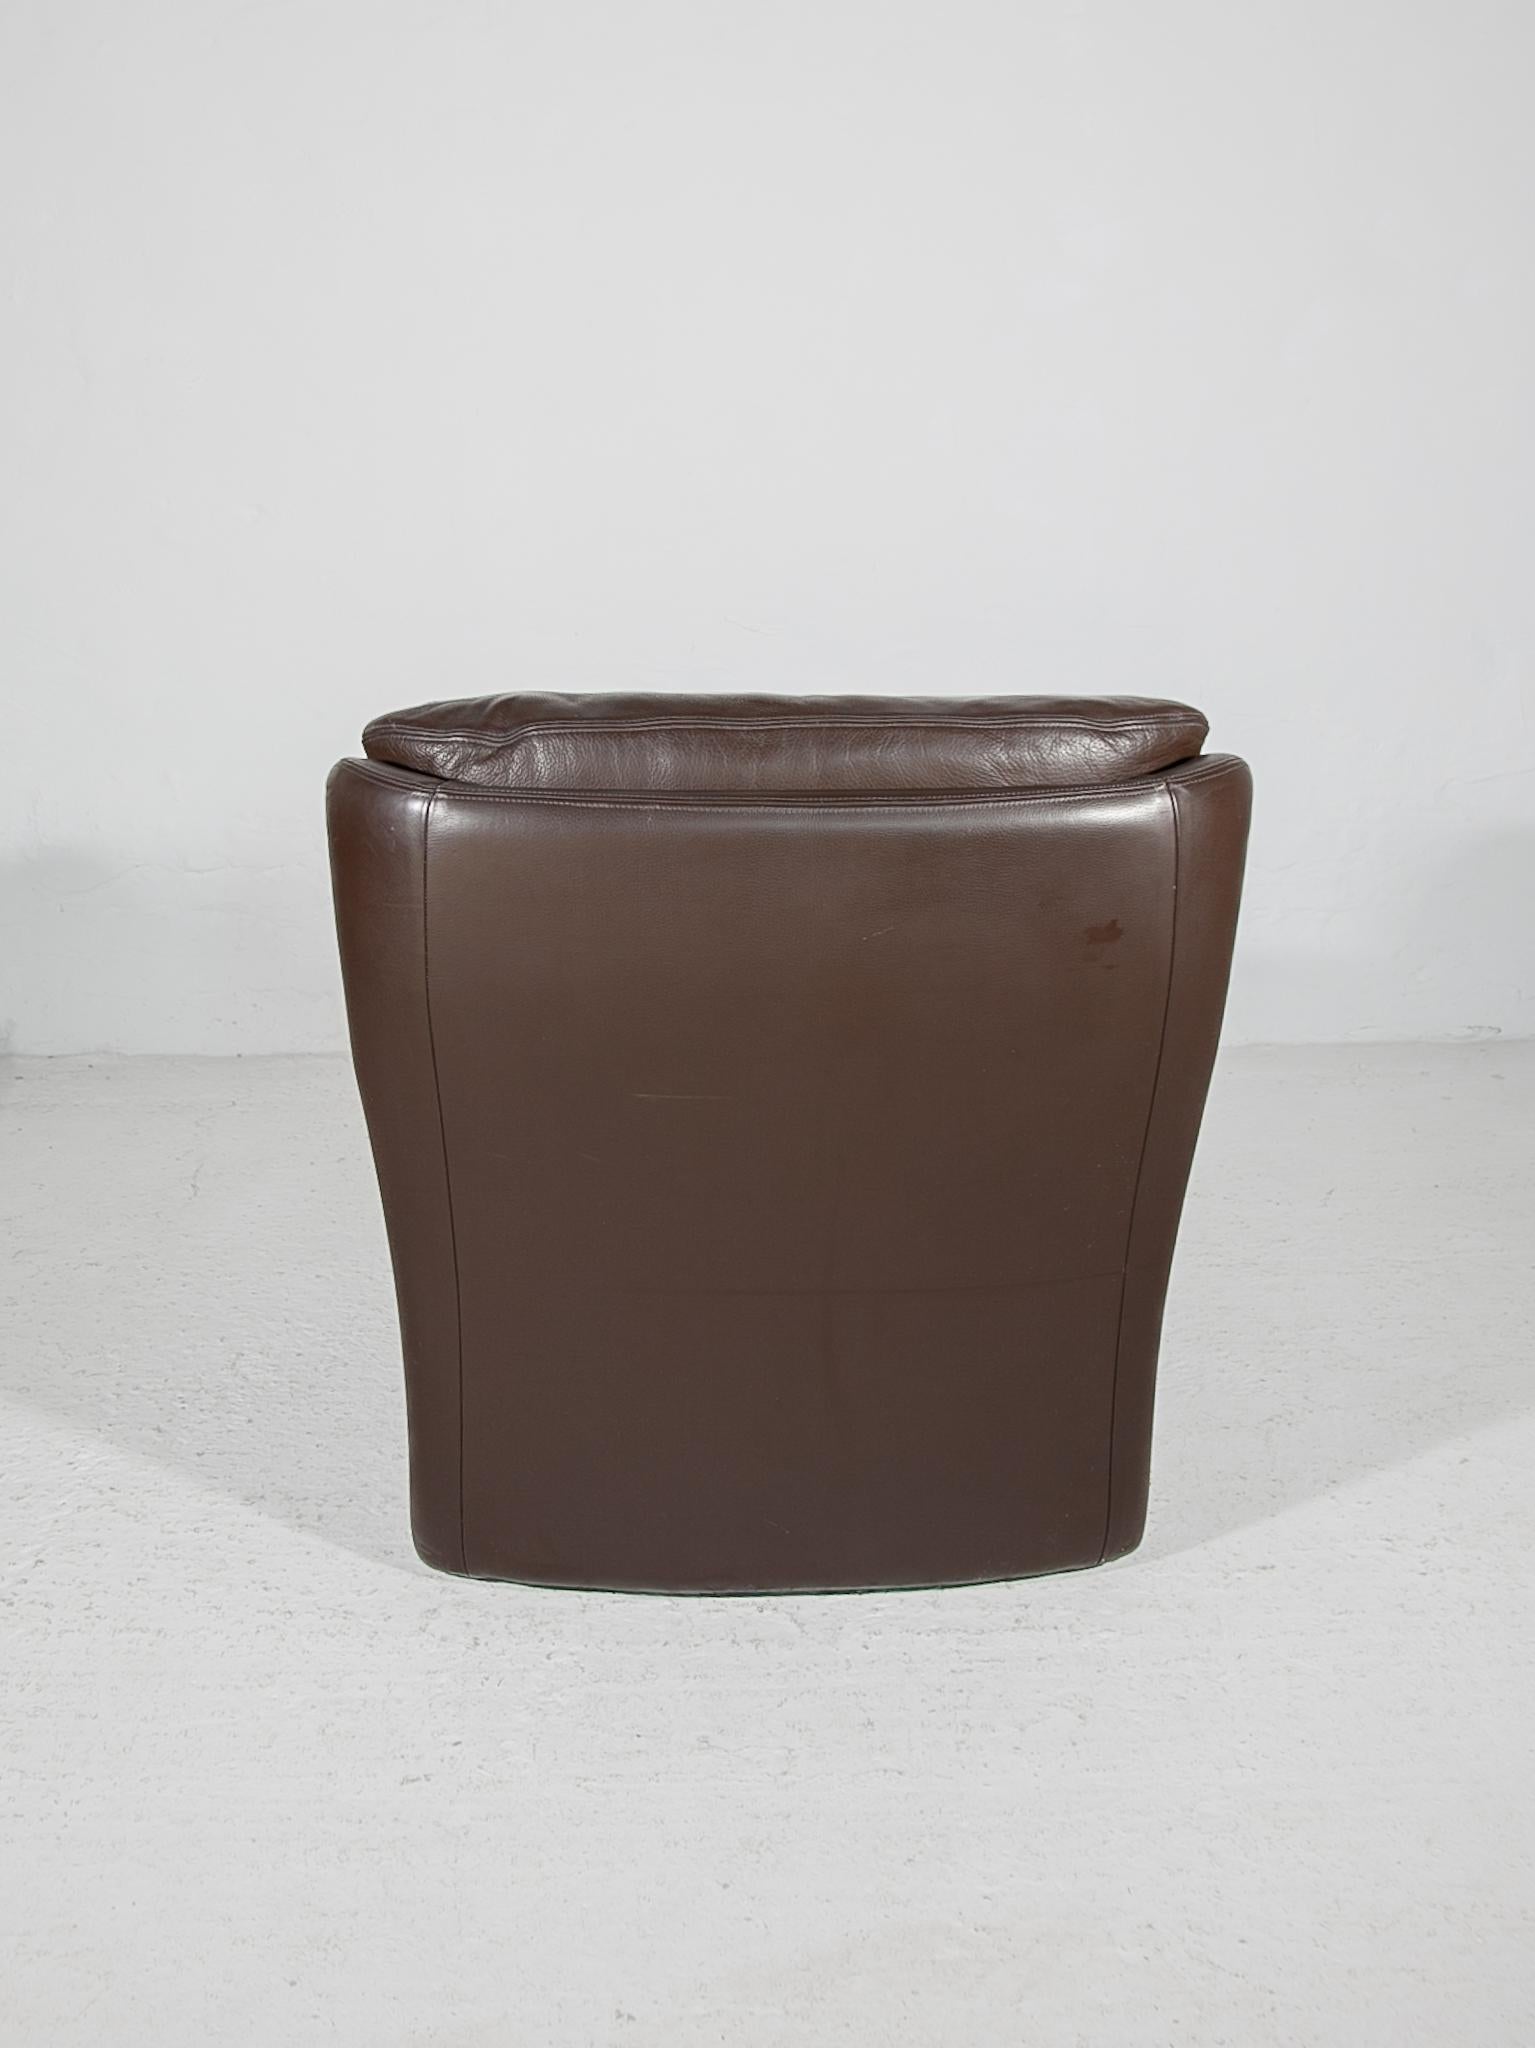  Durlet Lounge Chair, Buffolo Braunes Leder, 1970er Jahre (Handgefertigt) im Angebot